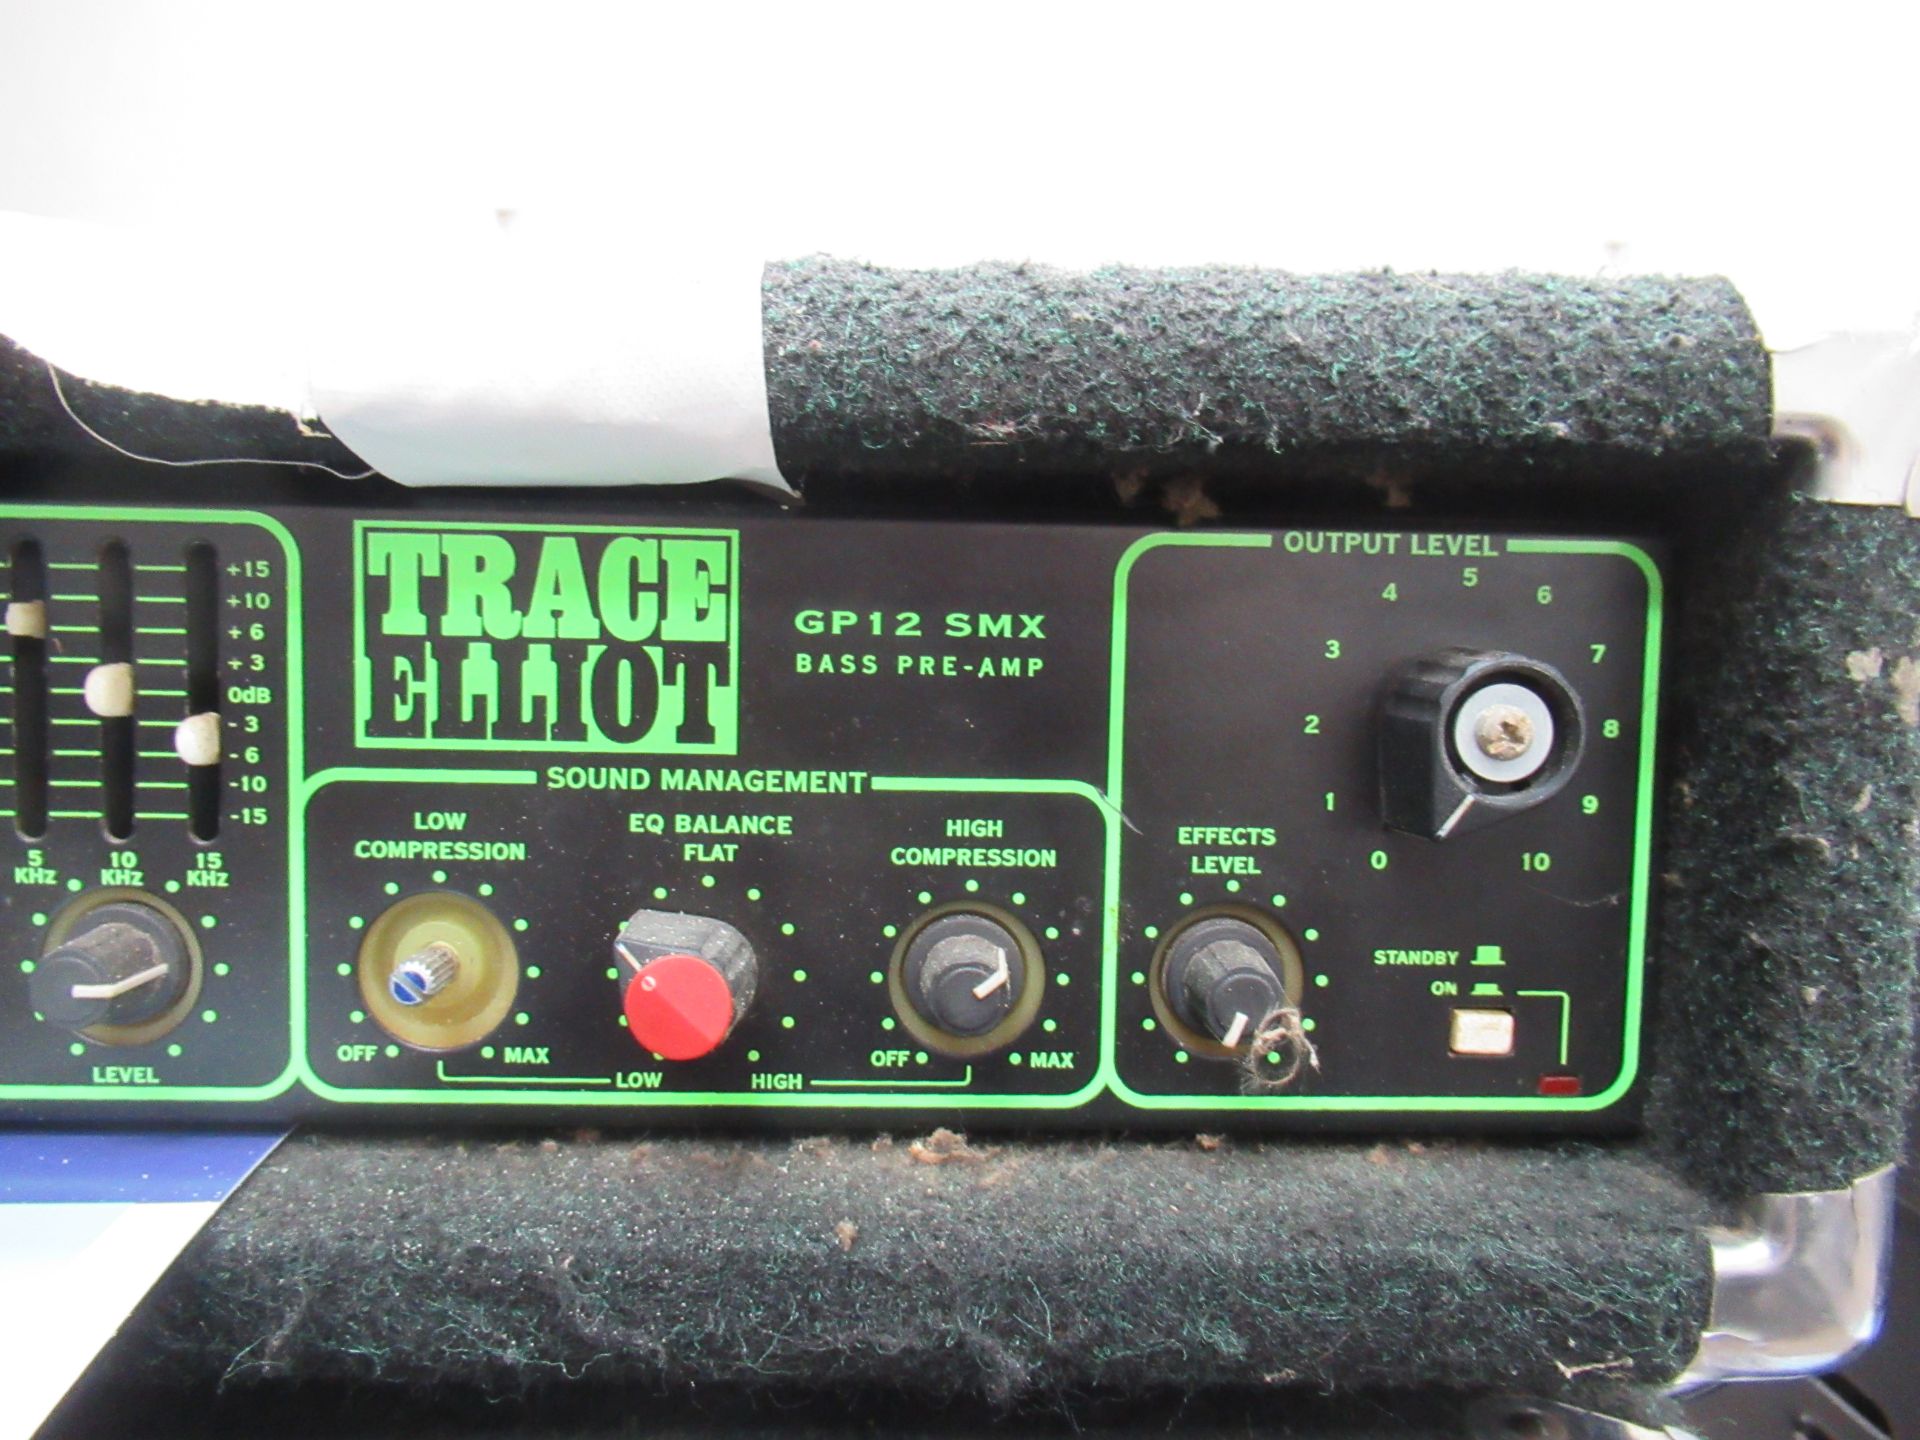 Trace Elliot GP12 SMX Pre-Amp - Image 3 of 6